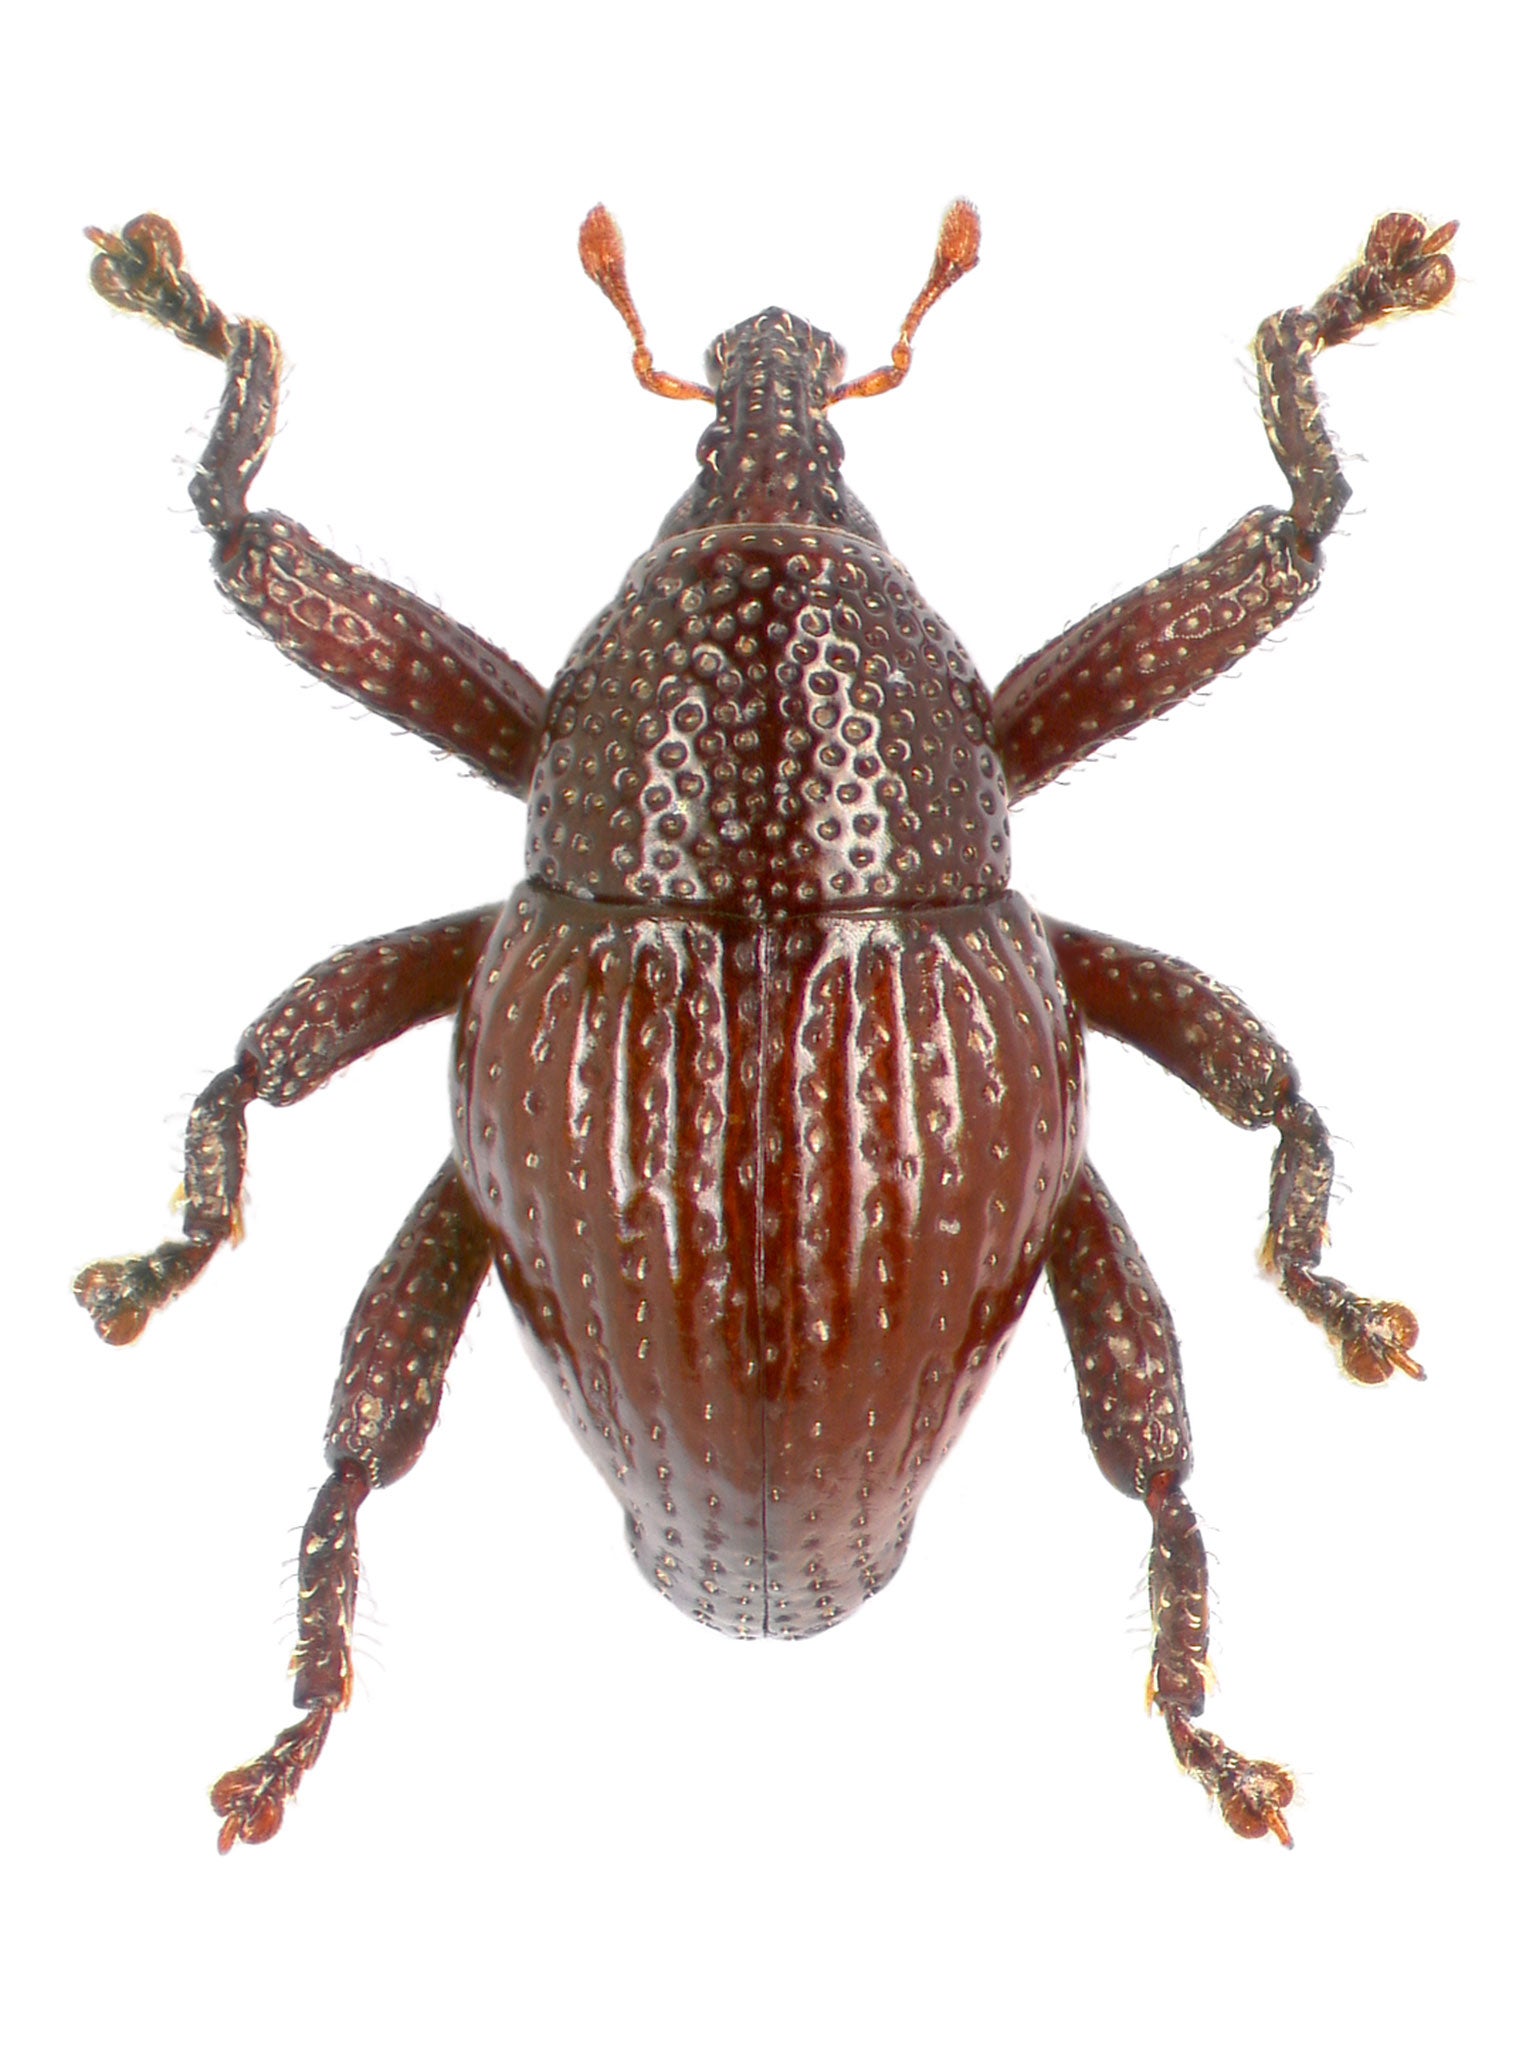 ‘Trigonopterus attenboroughi’, the beetle named after Sir David Attenborough